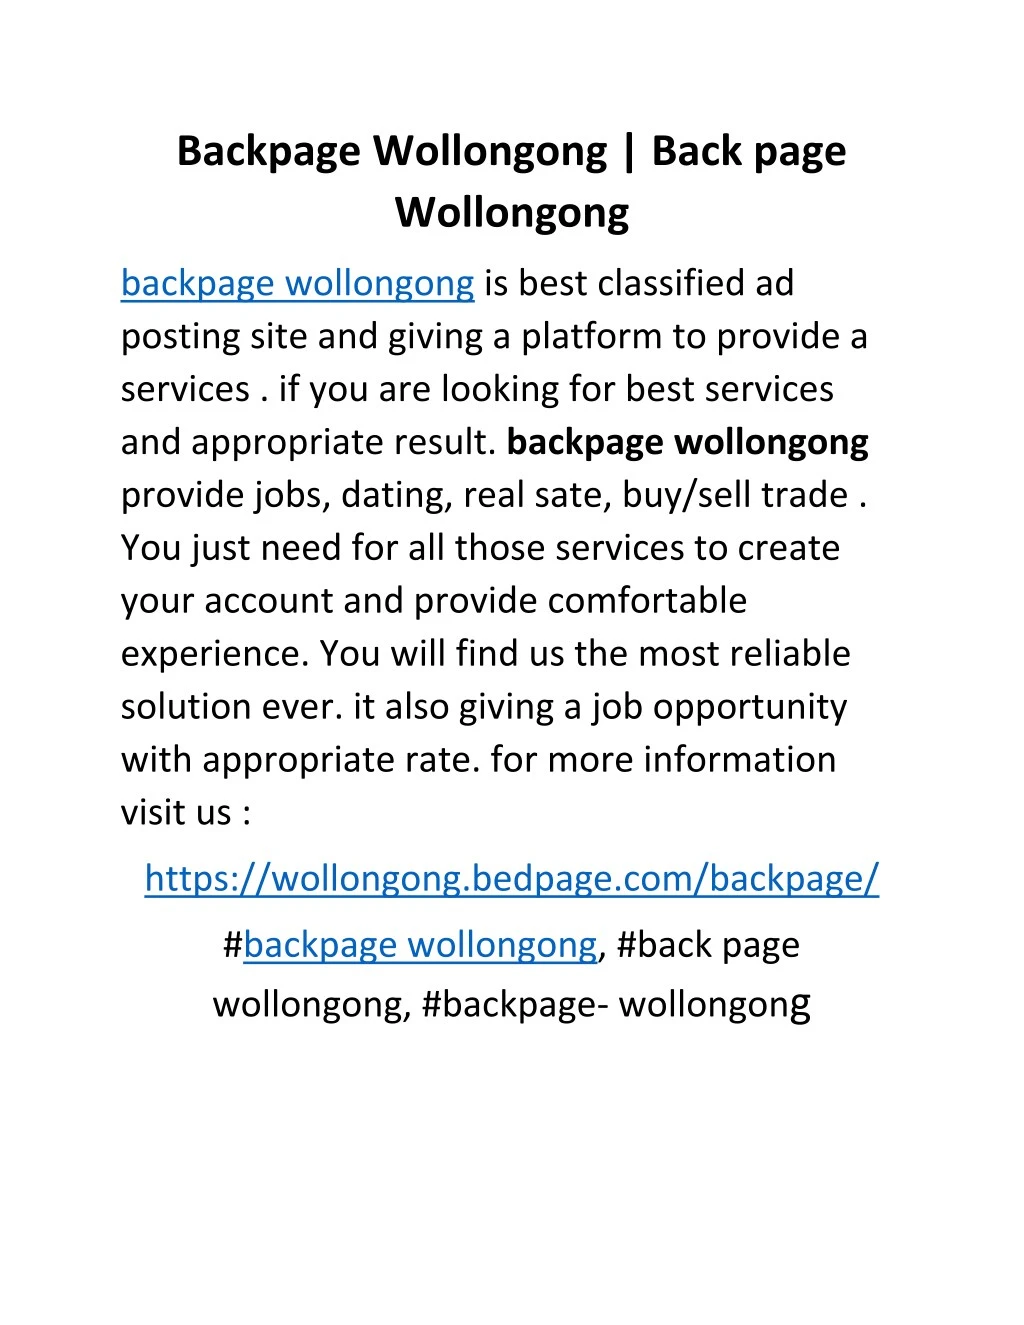 backpage wollongong back page wollongong